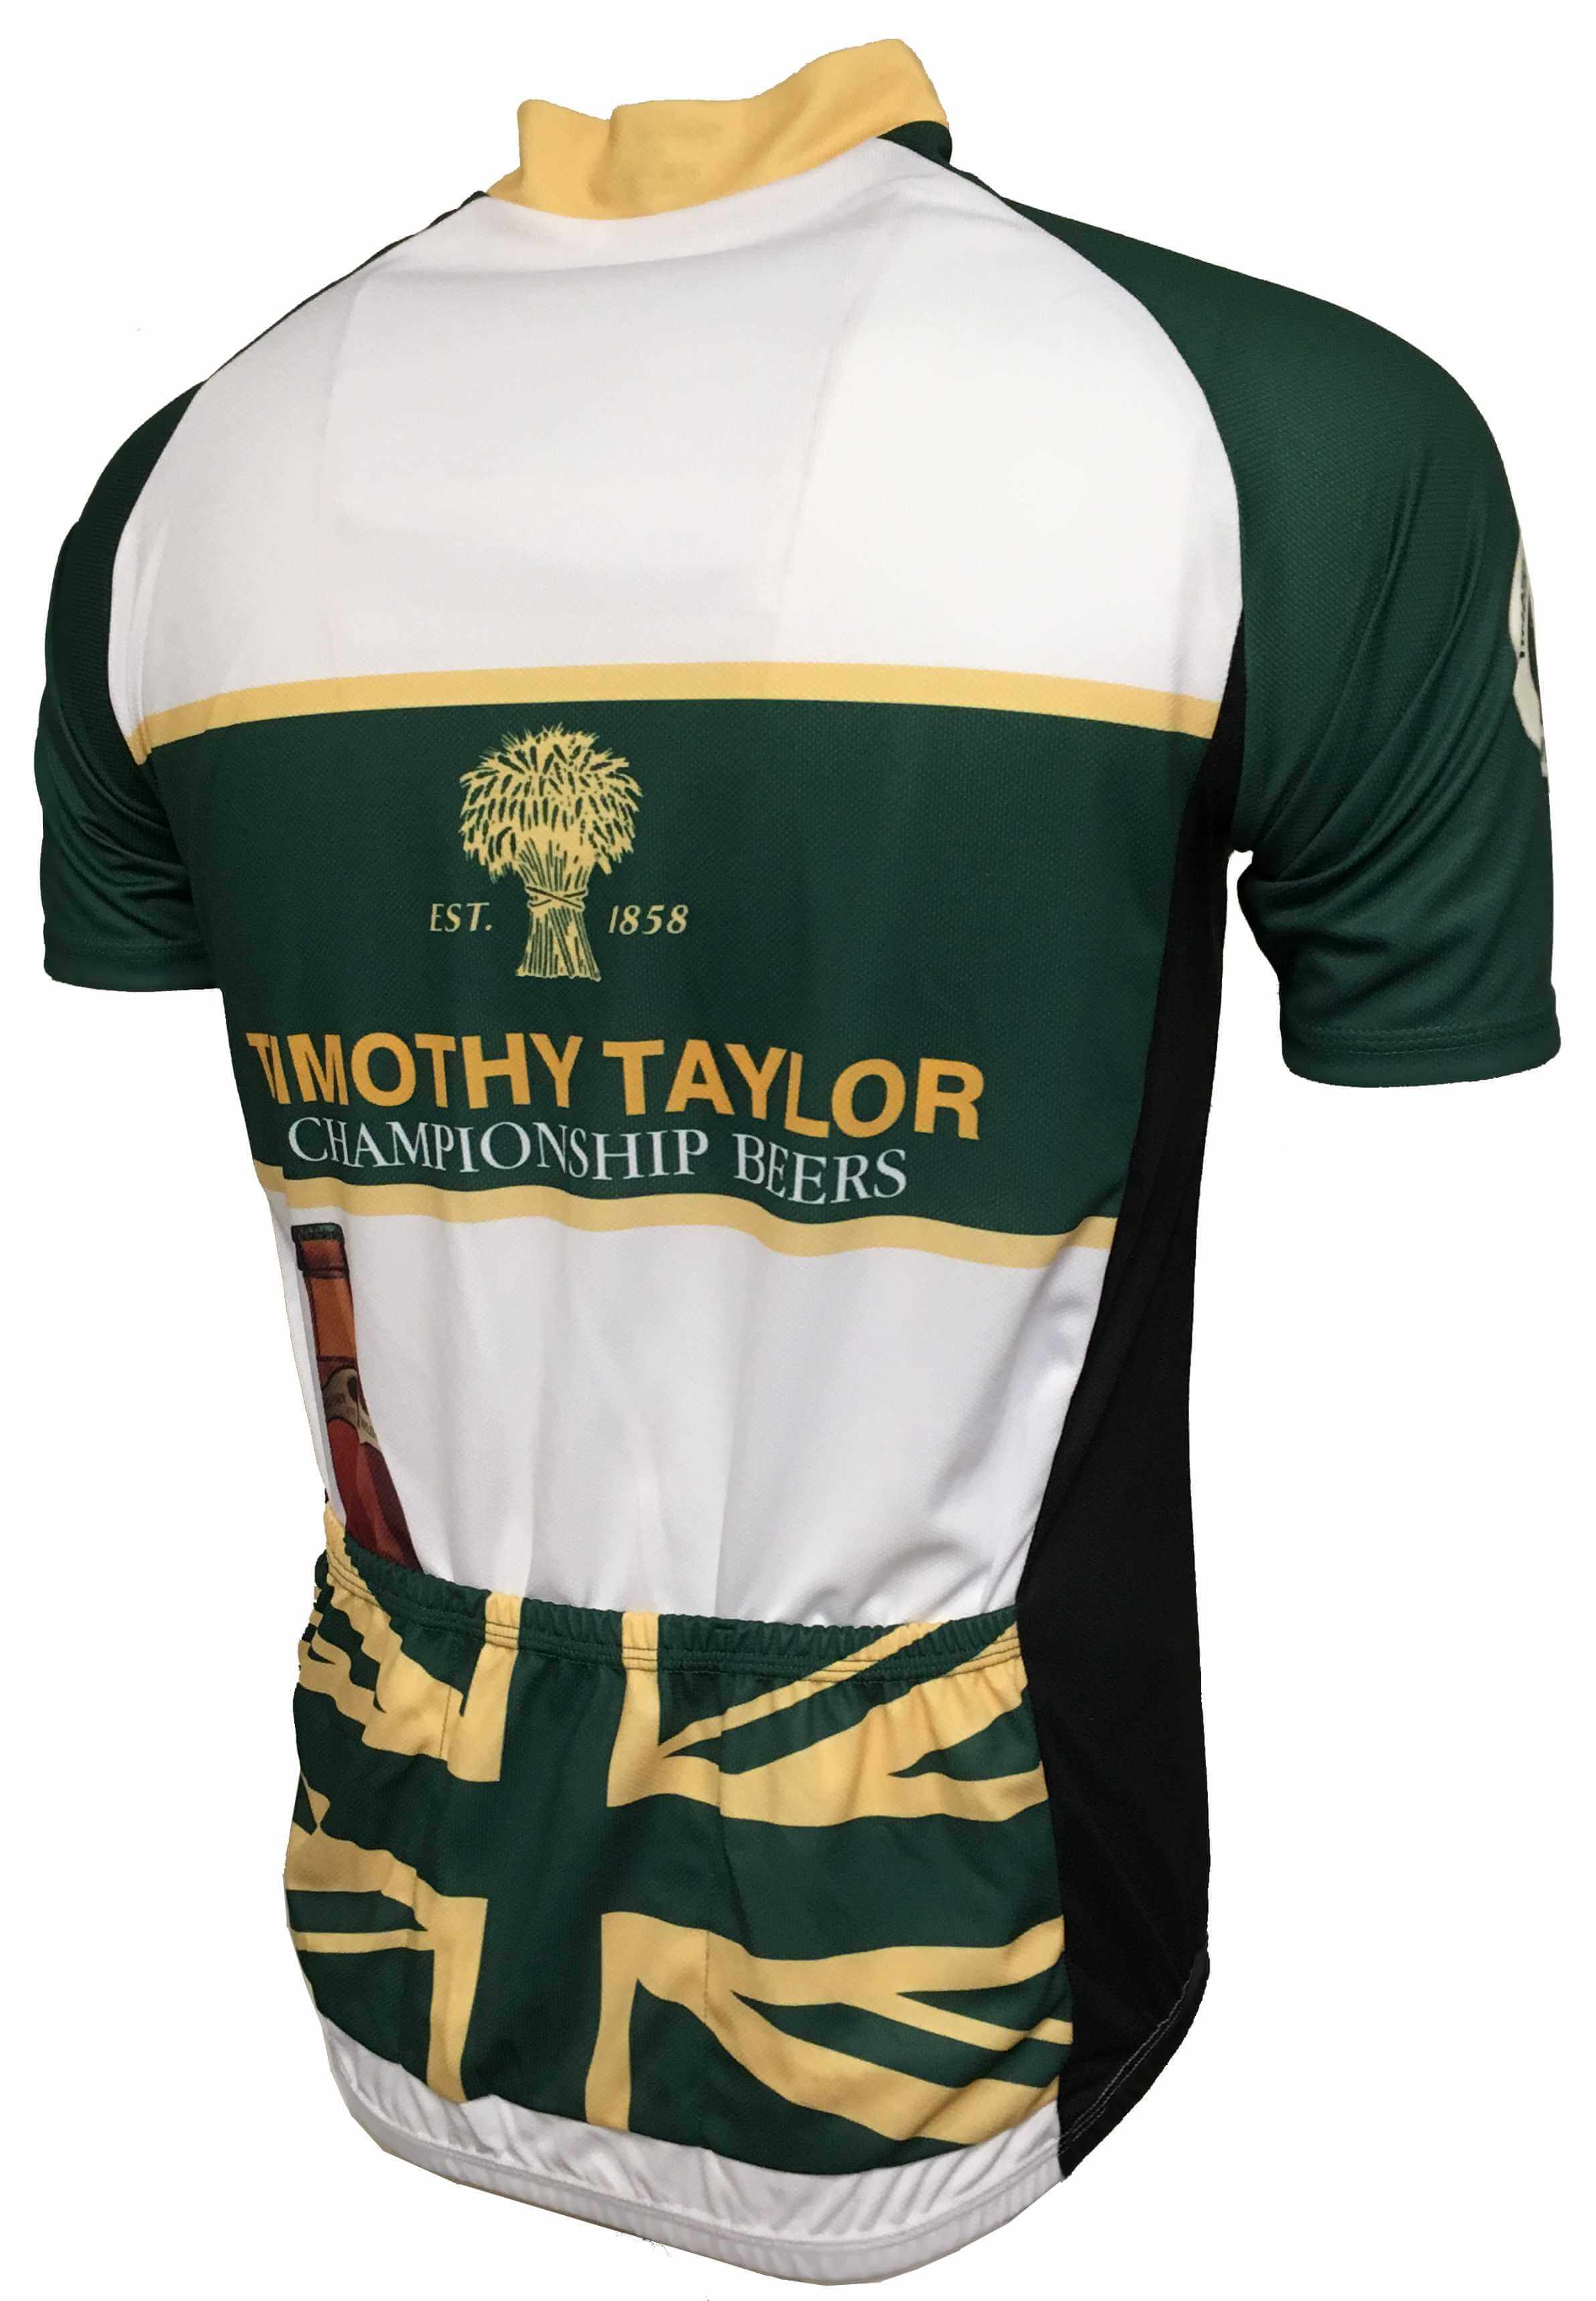 Timothy Taylor Original Road Cycling Jersey Back